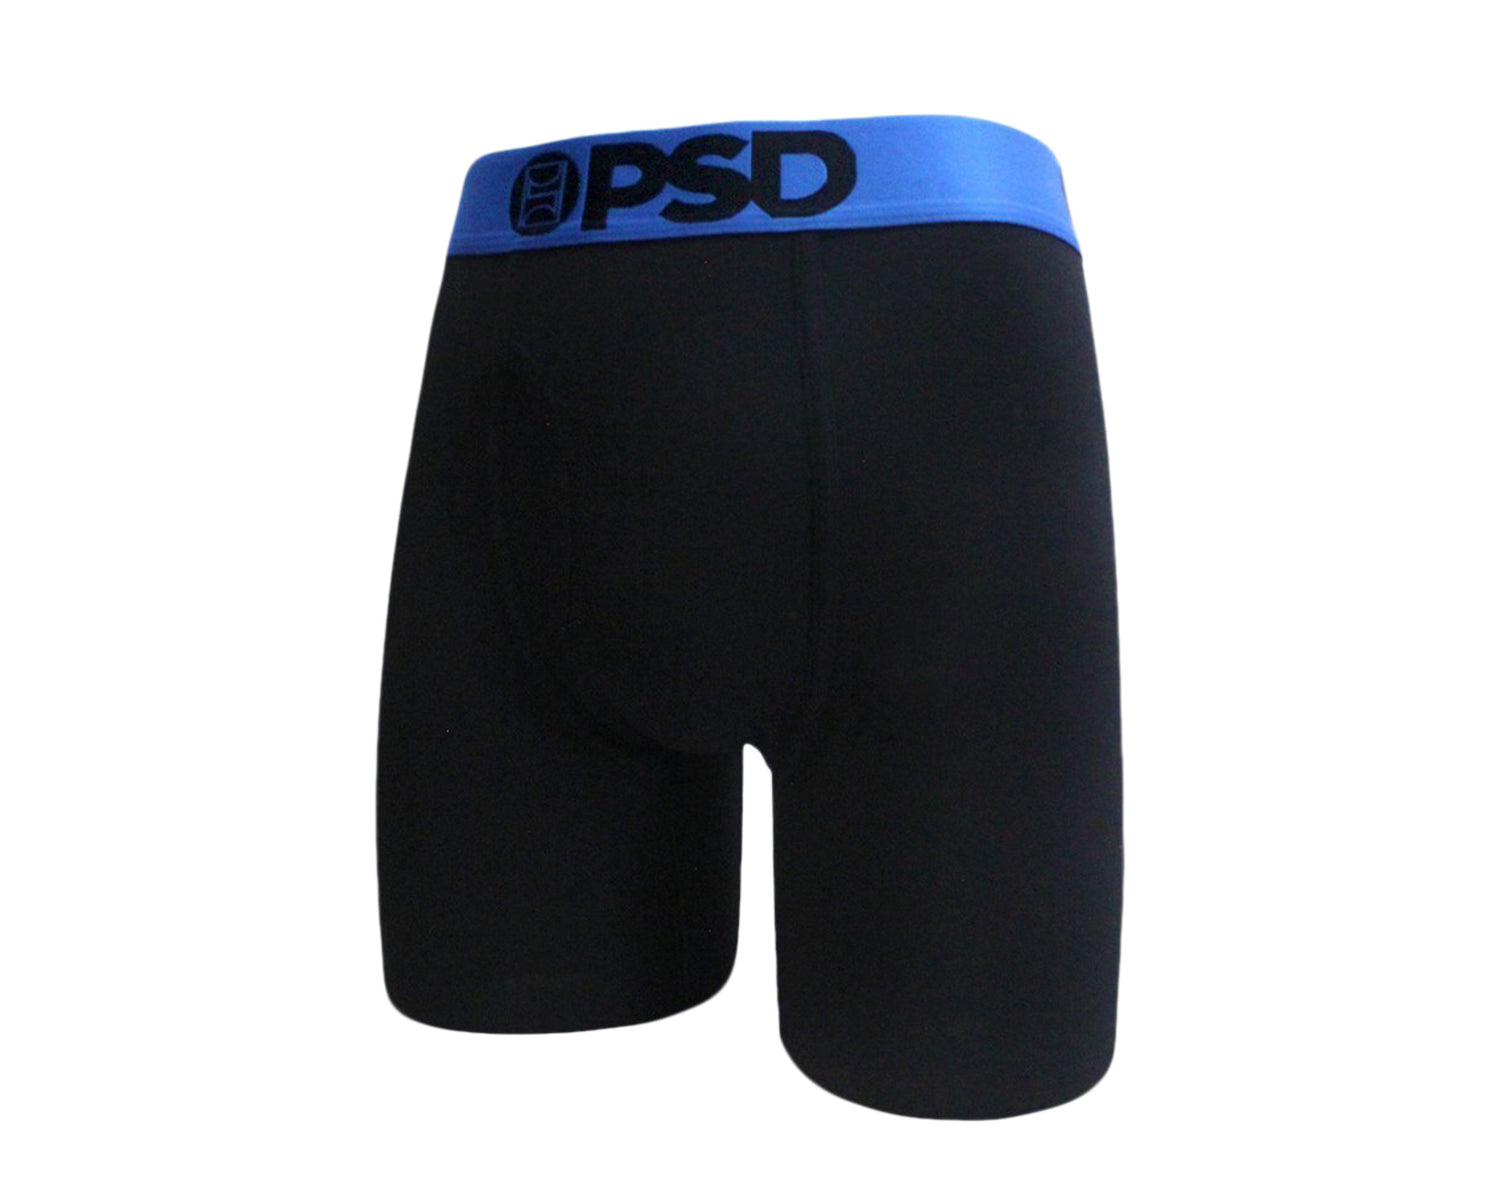 PSD Model - 3-Pack Boxer Briefs Men's Underwear